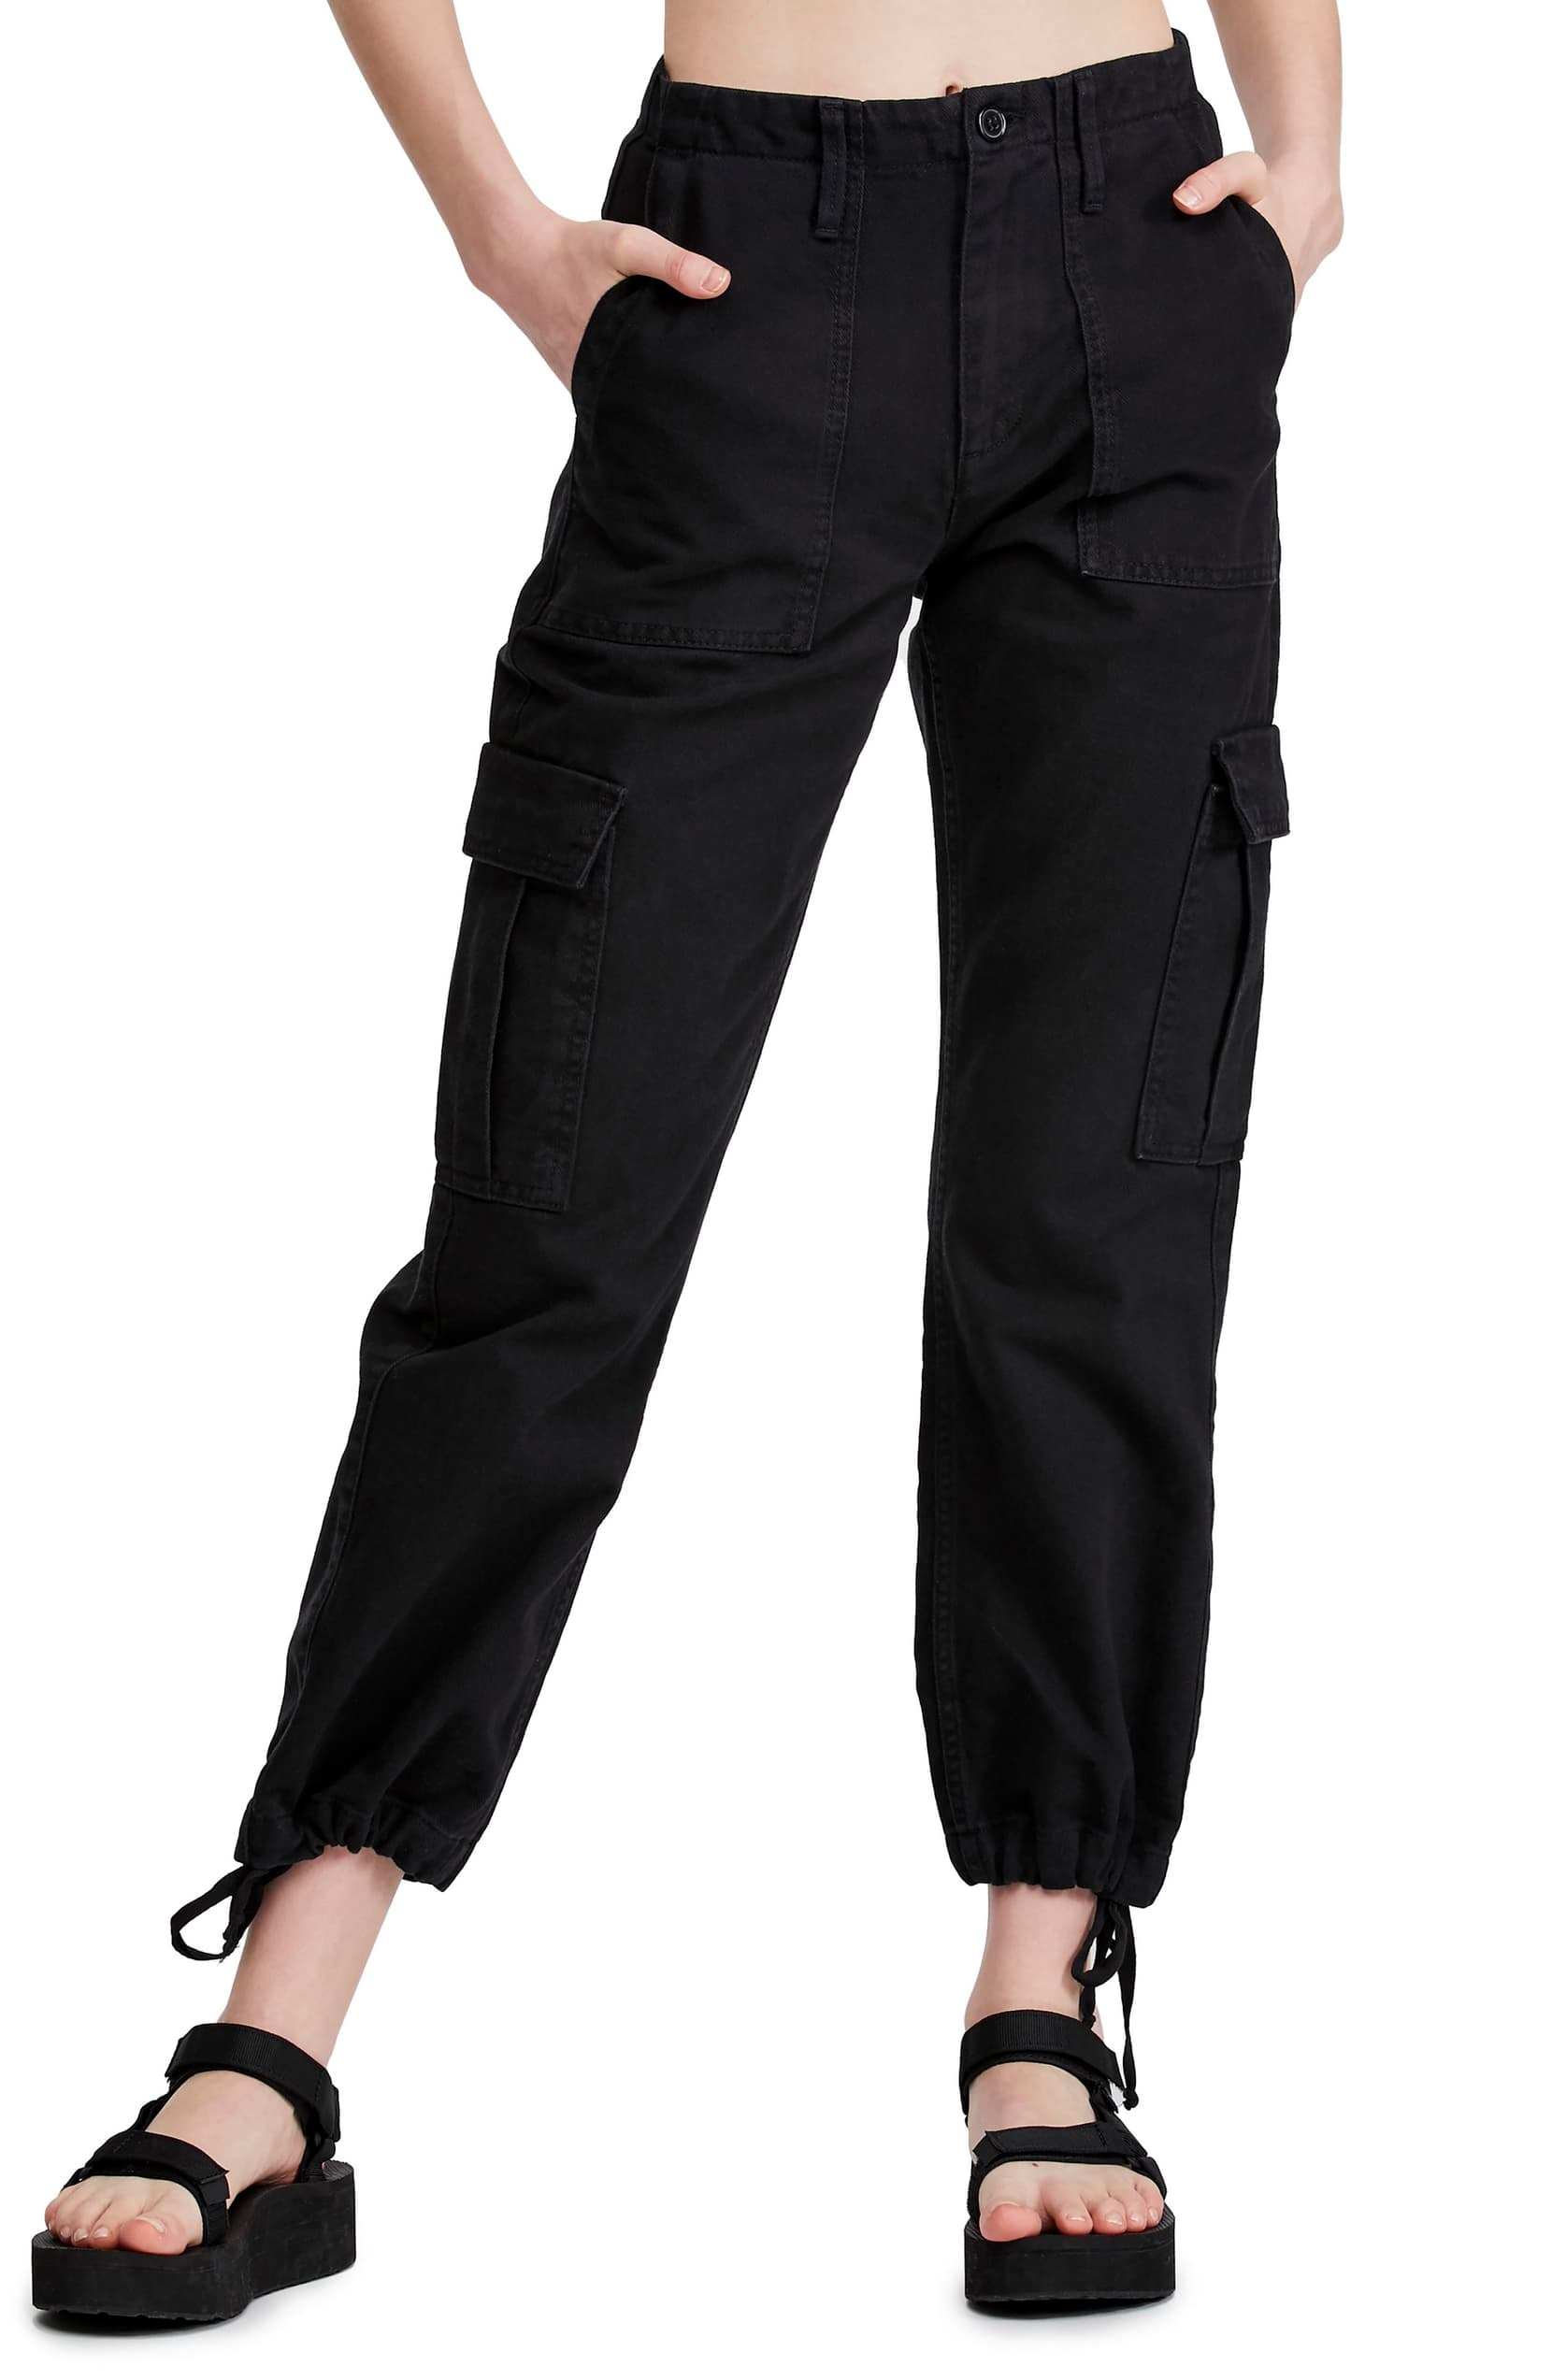 BDG Urban Outfitters NEW - Cargo trousers - lilac - Zalando.de